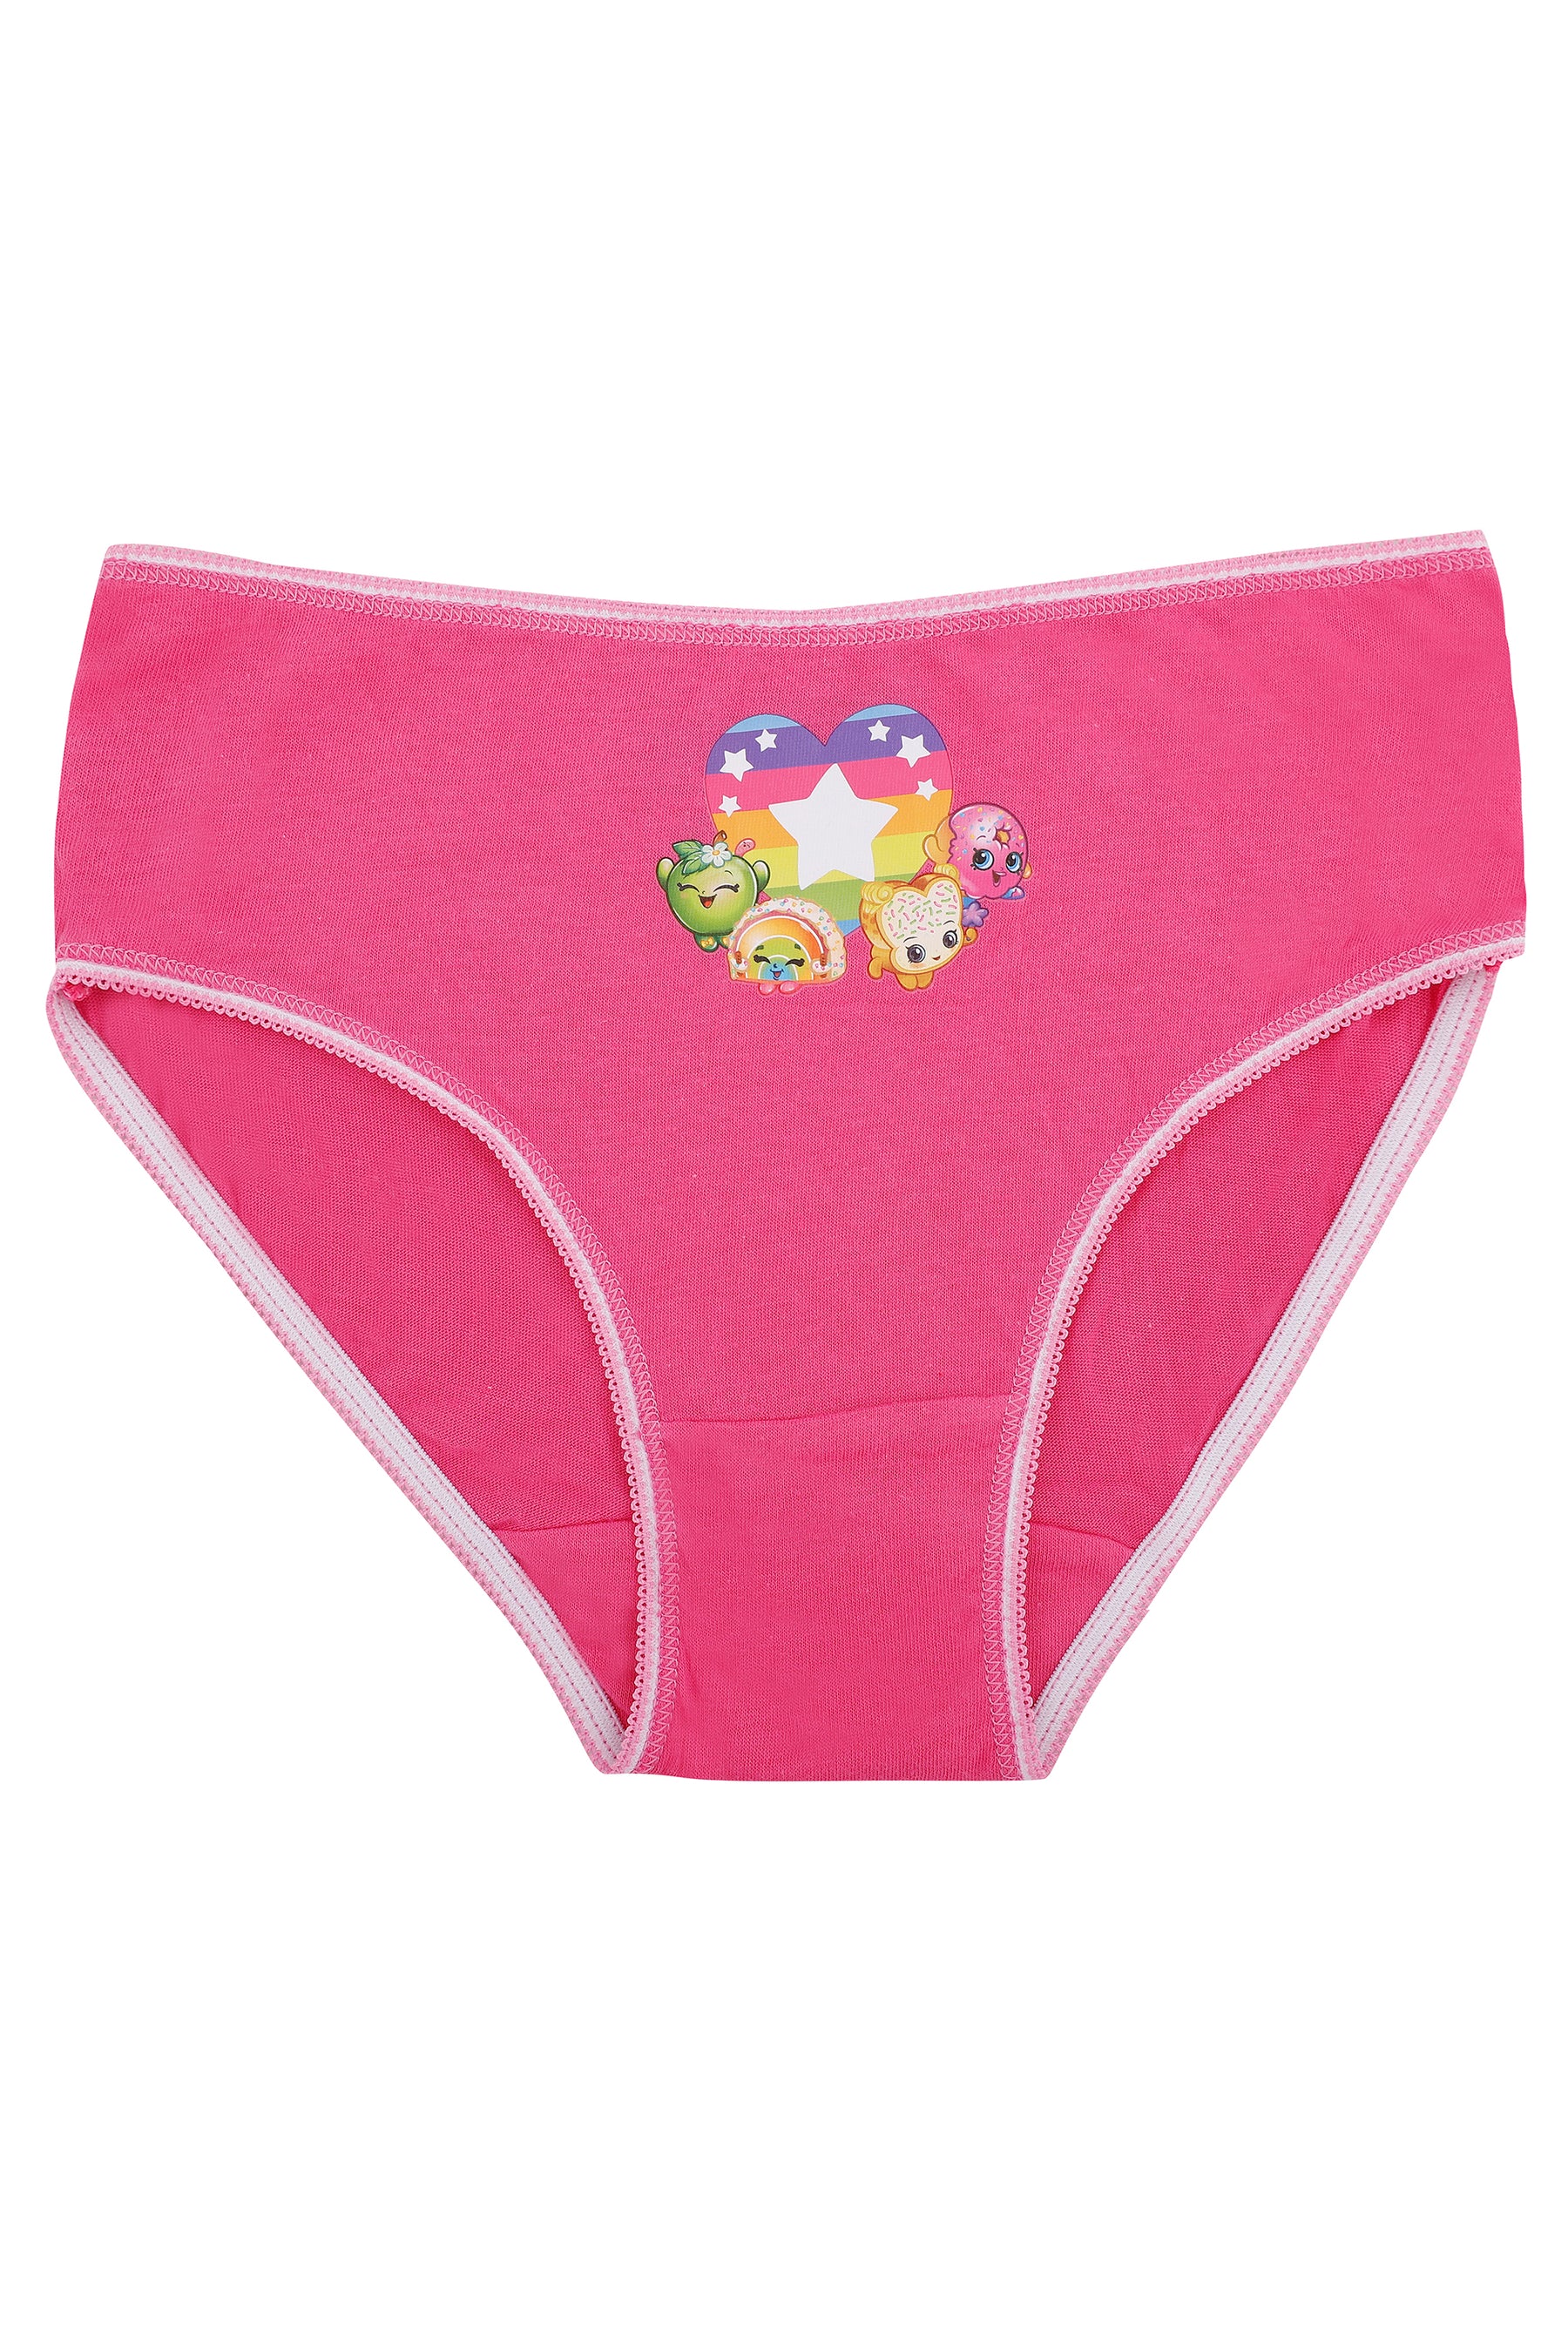 Shopkins Underwear Underpants Girls 3 Brief Panties Undie Sz 4 6 8